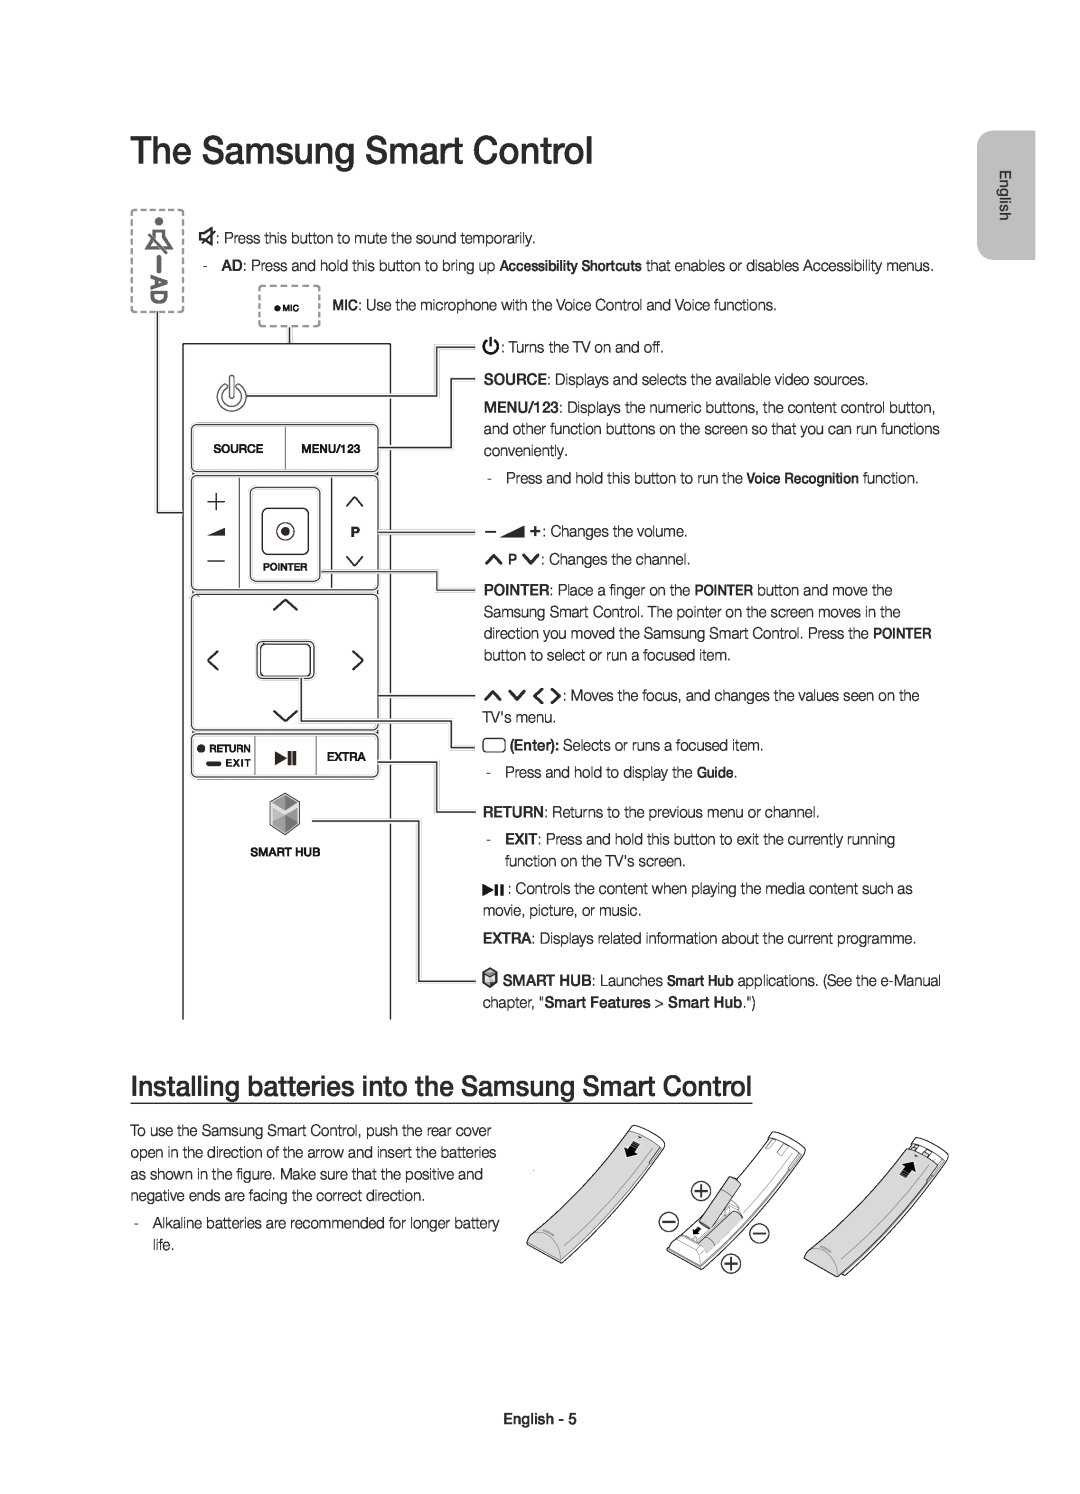 Samsung UE48JU7000TXZT, UE40JU7000TXZF manual The Samsung Smart Control, Installing batteries into the Samsung Smart Control 